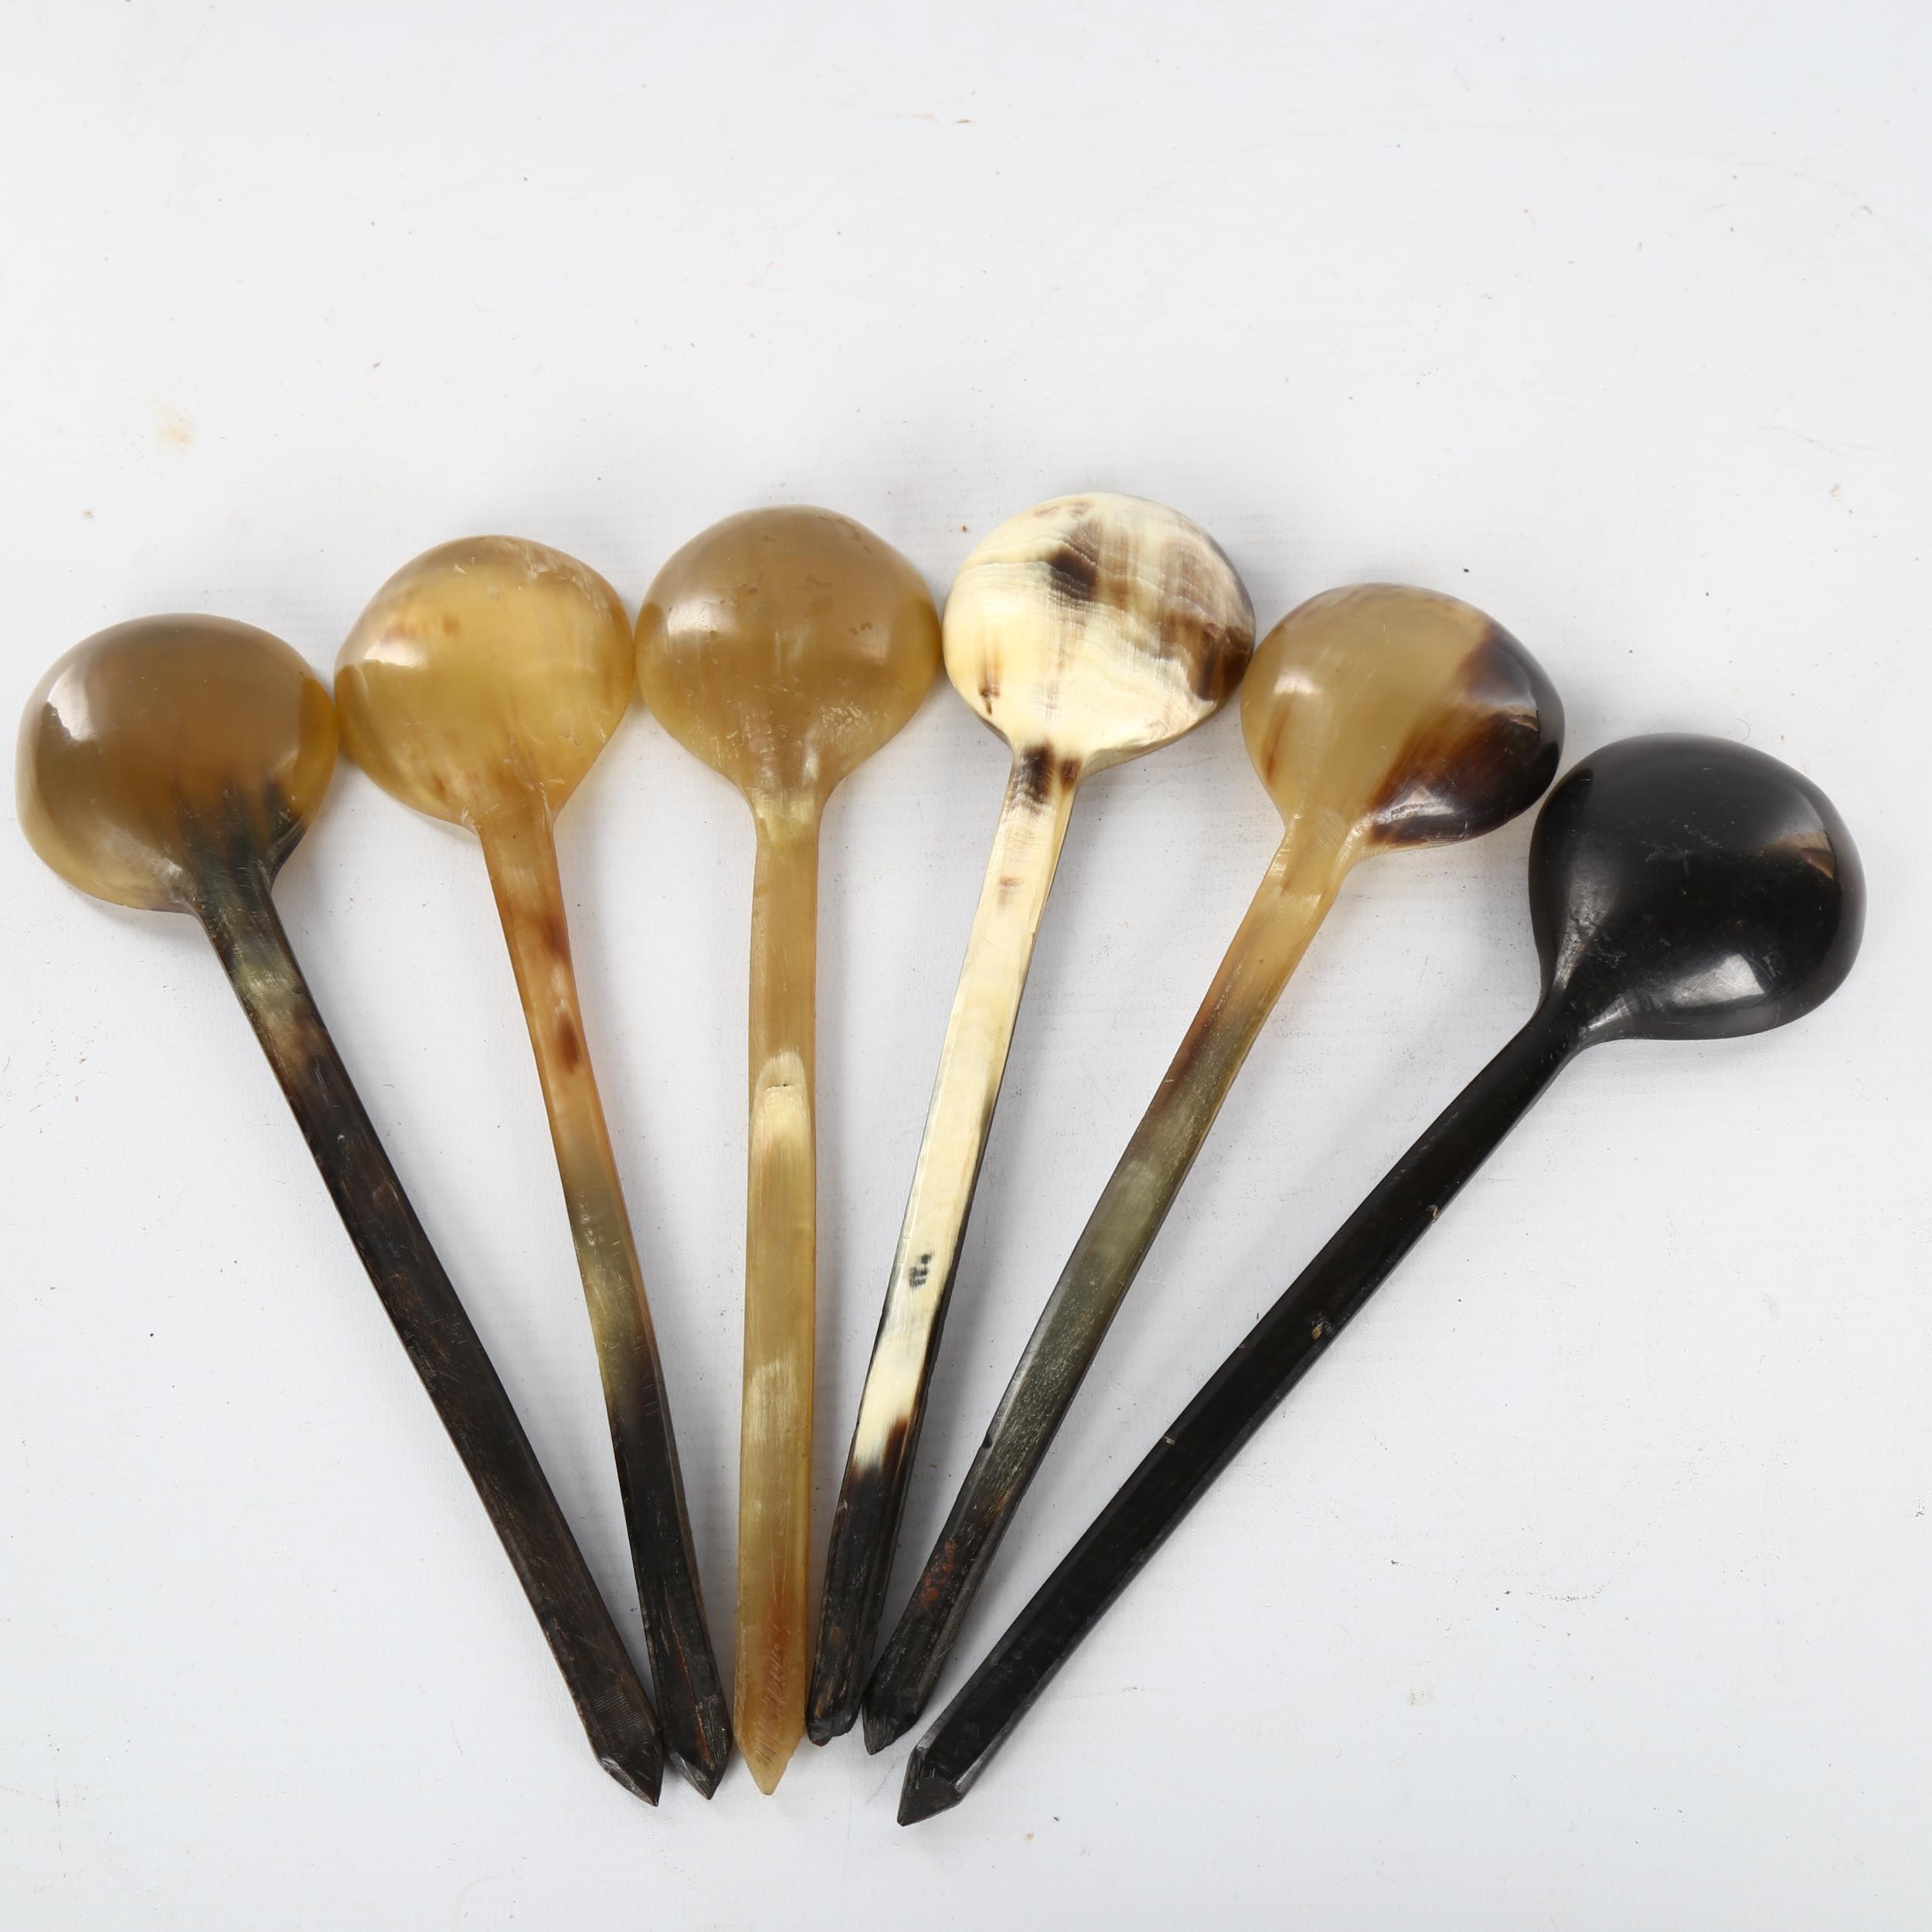 6 Scottish horn spoons, length 24cm - Image 3 of 3